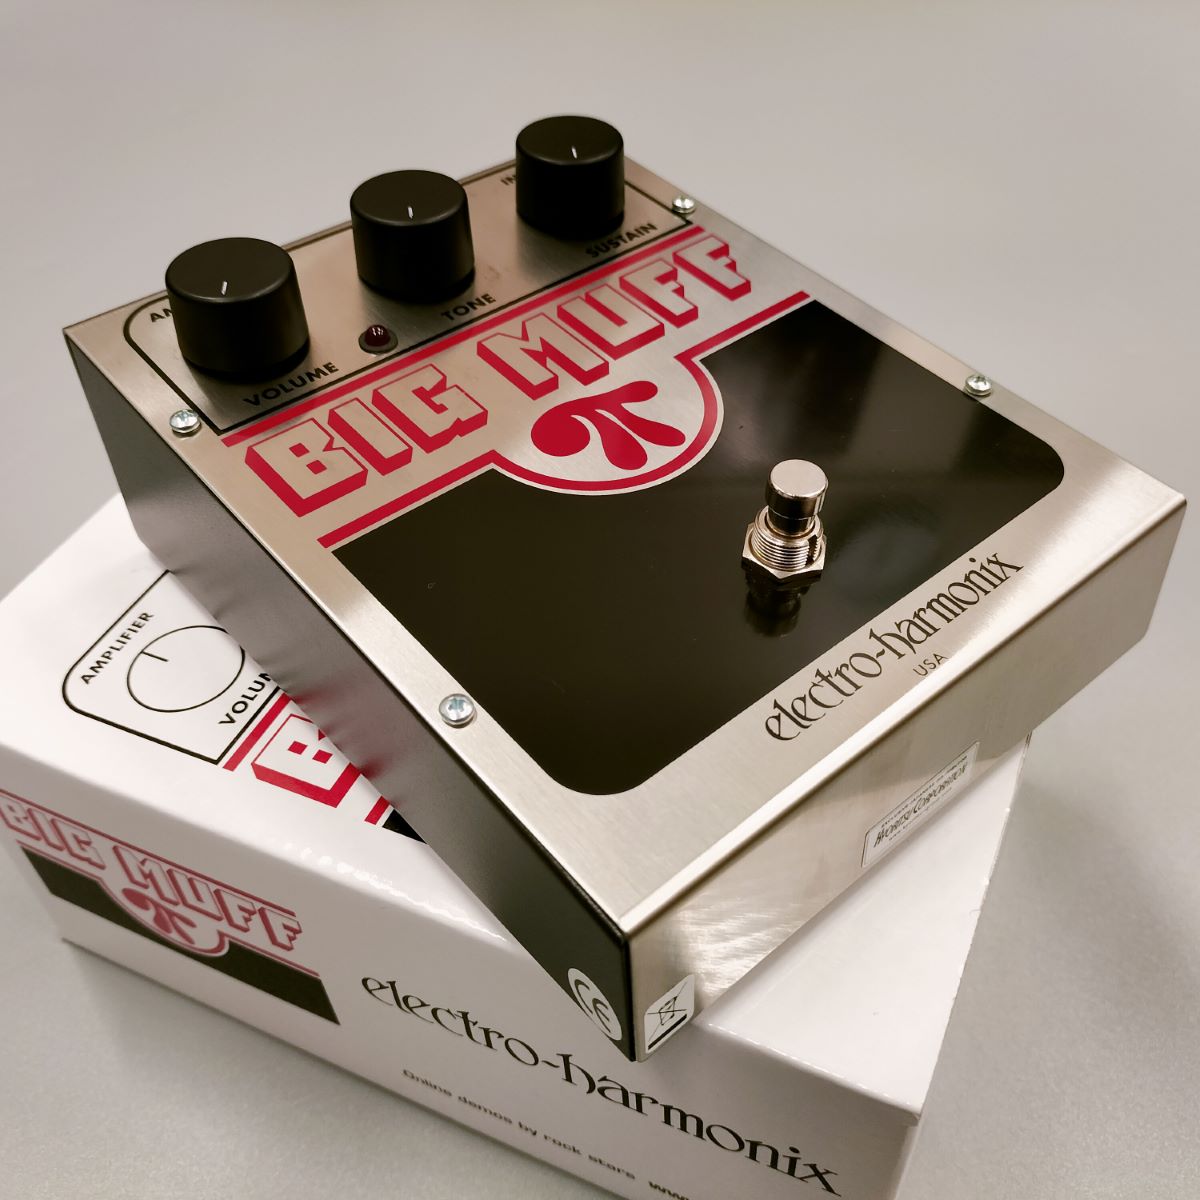 electro-harmonix BIG MUFF Pi